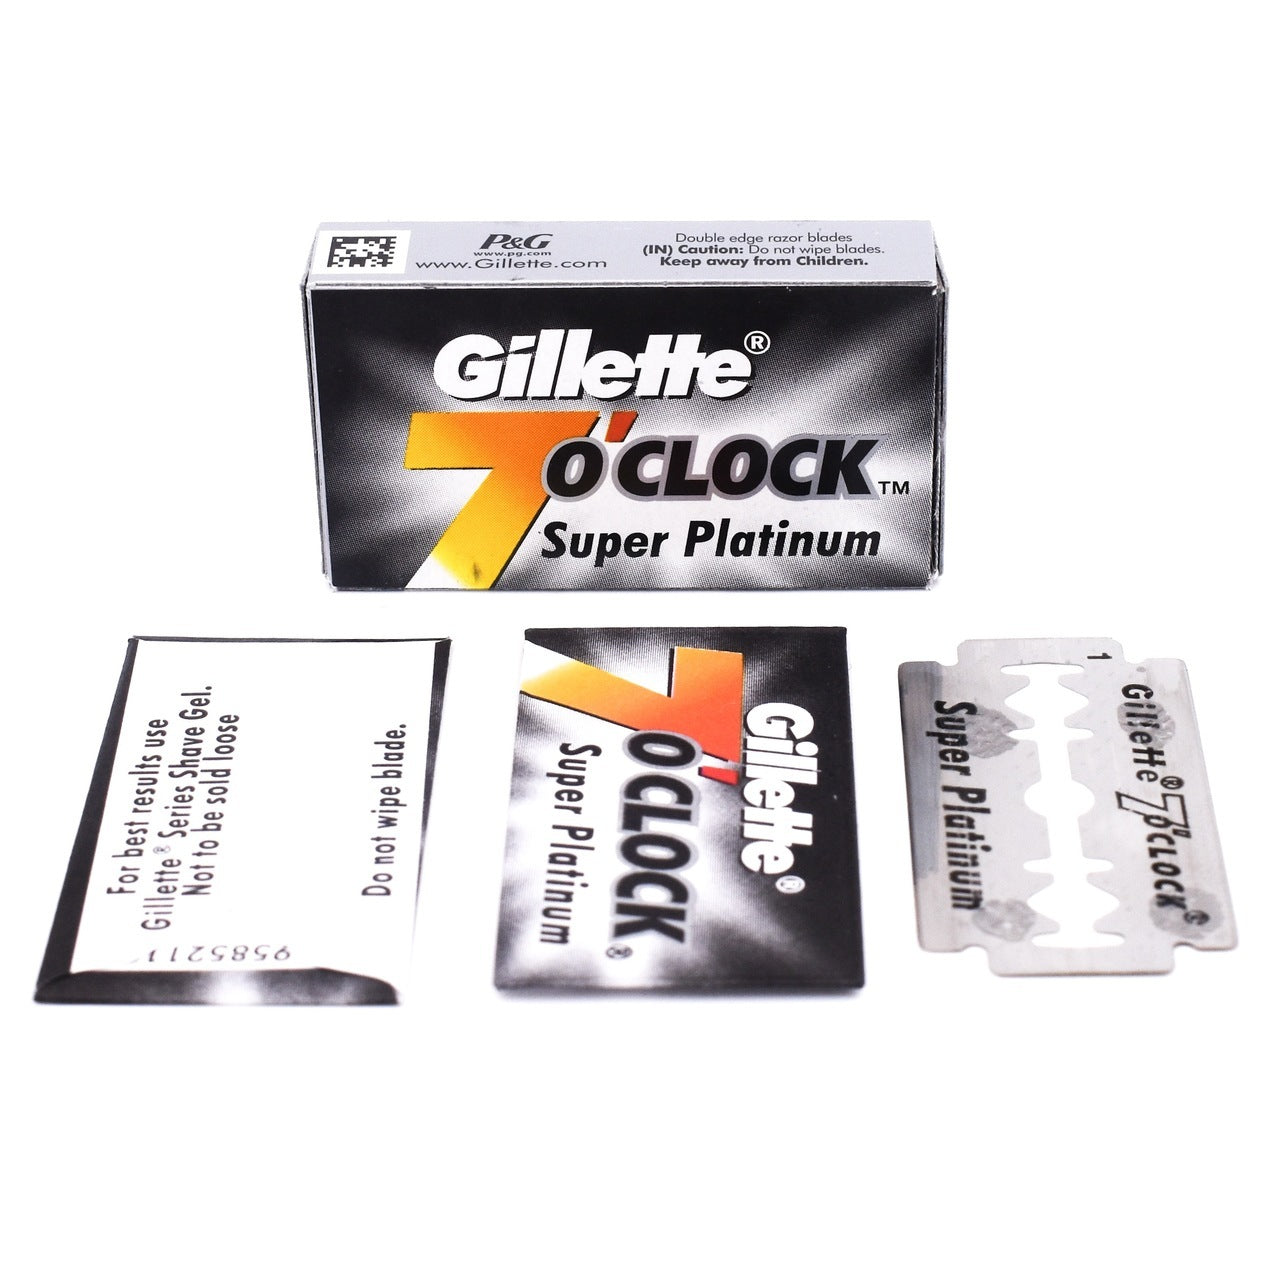 Gillette - 7 O'clock Black Super Platinum Double-Edge Razor